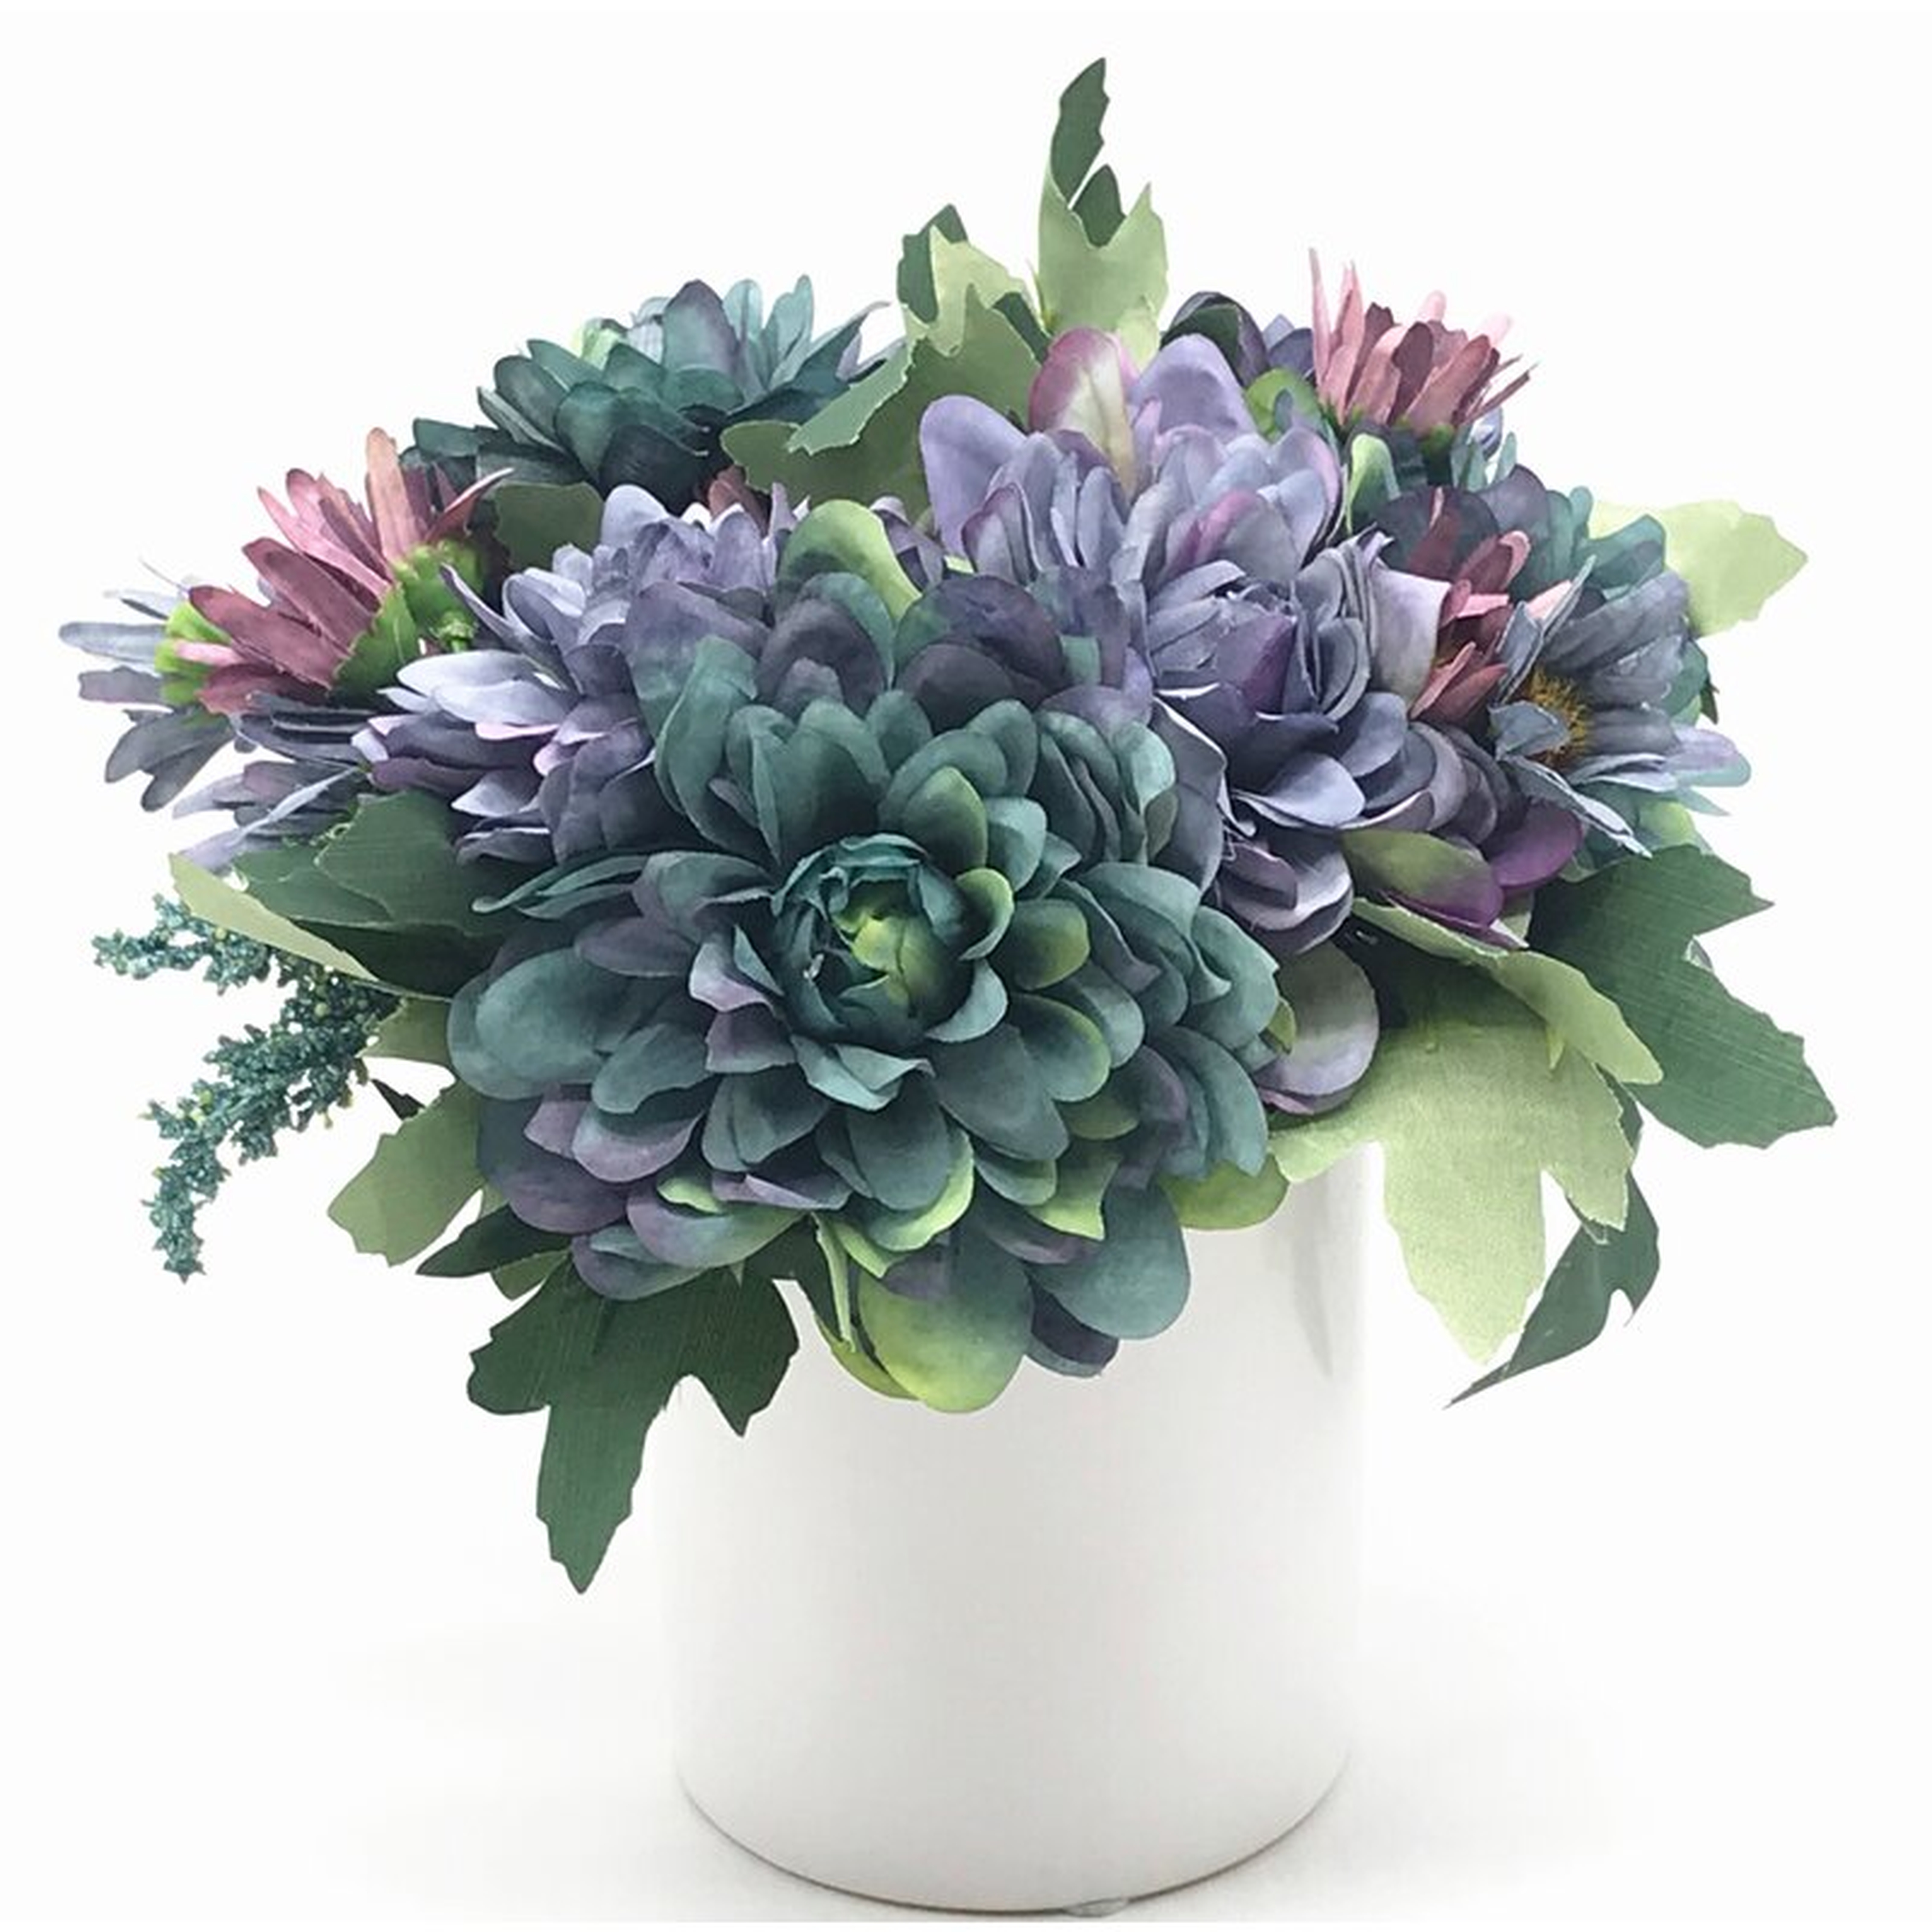 Daisies and Mixed Flower Arrangement in Vase - Wayfair